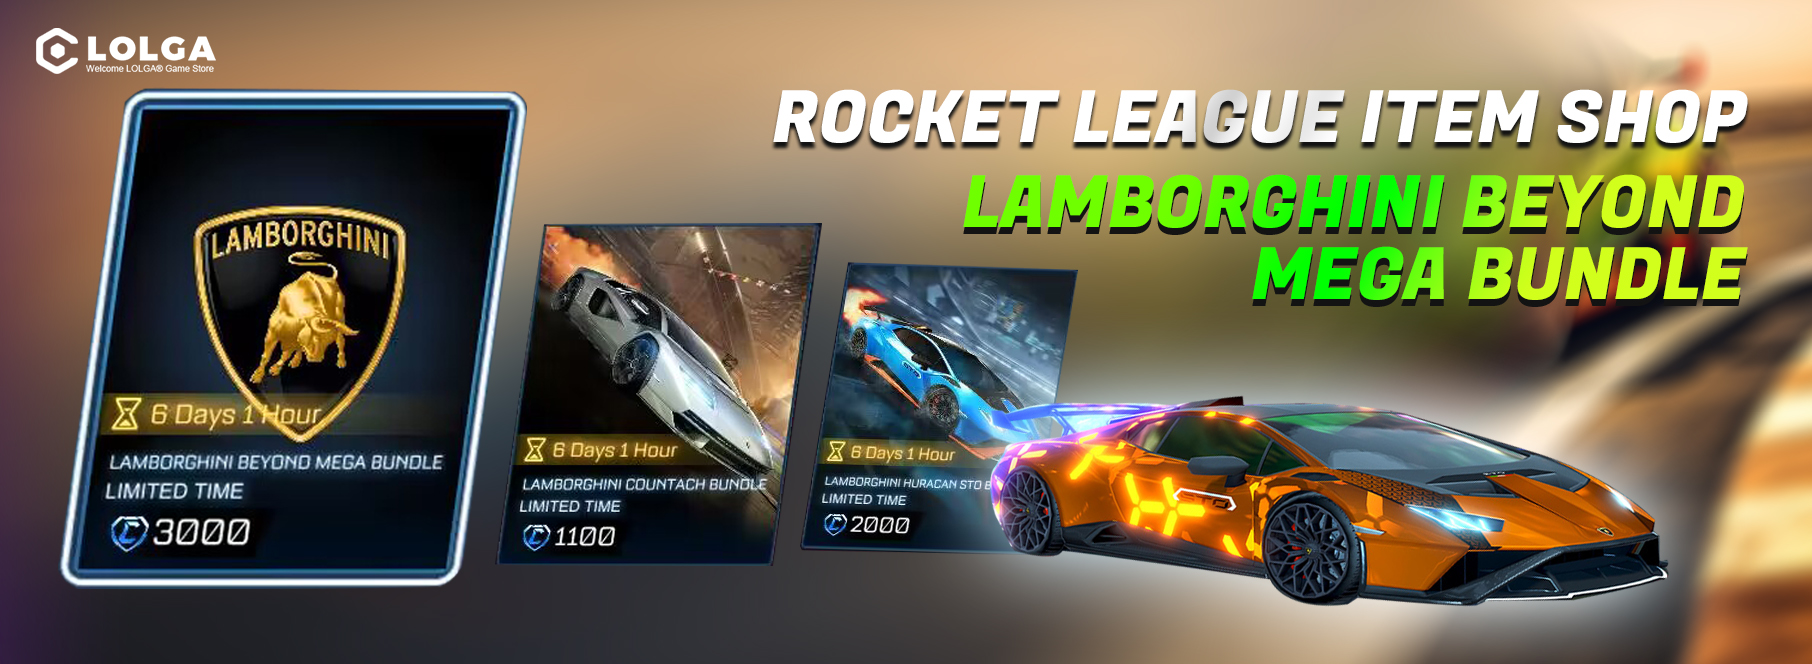 Rocket League Item Shop: Lamborghini Beyond Mega Bundle